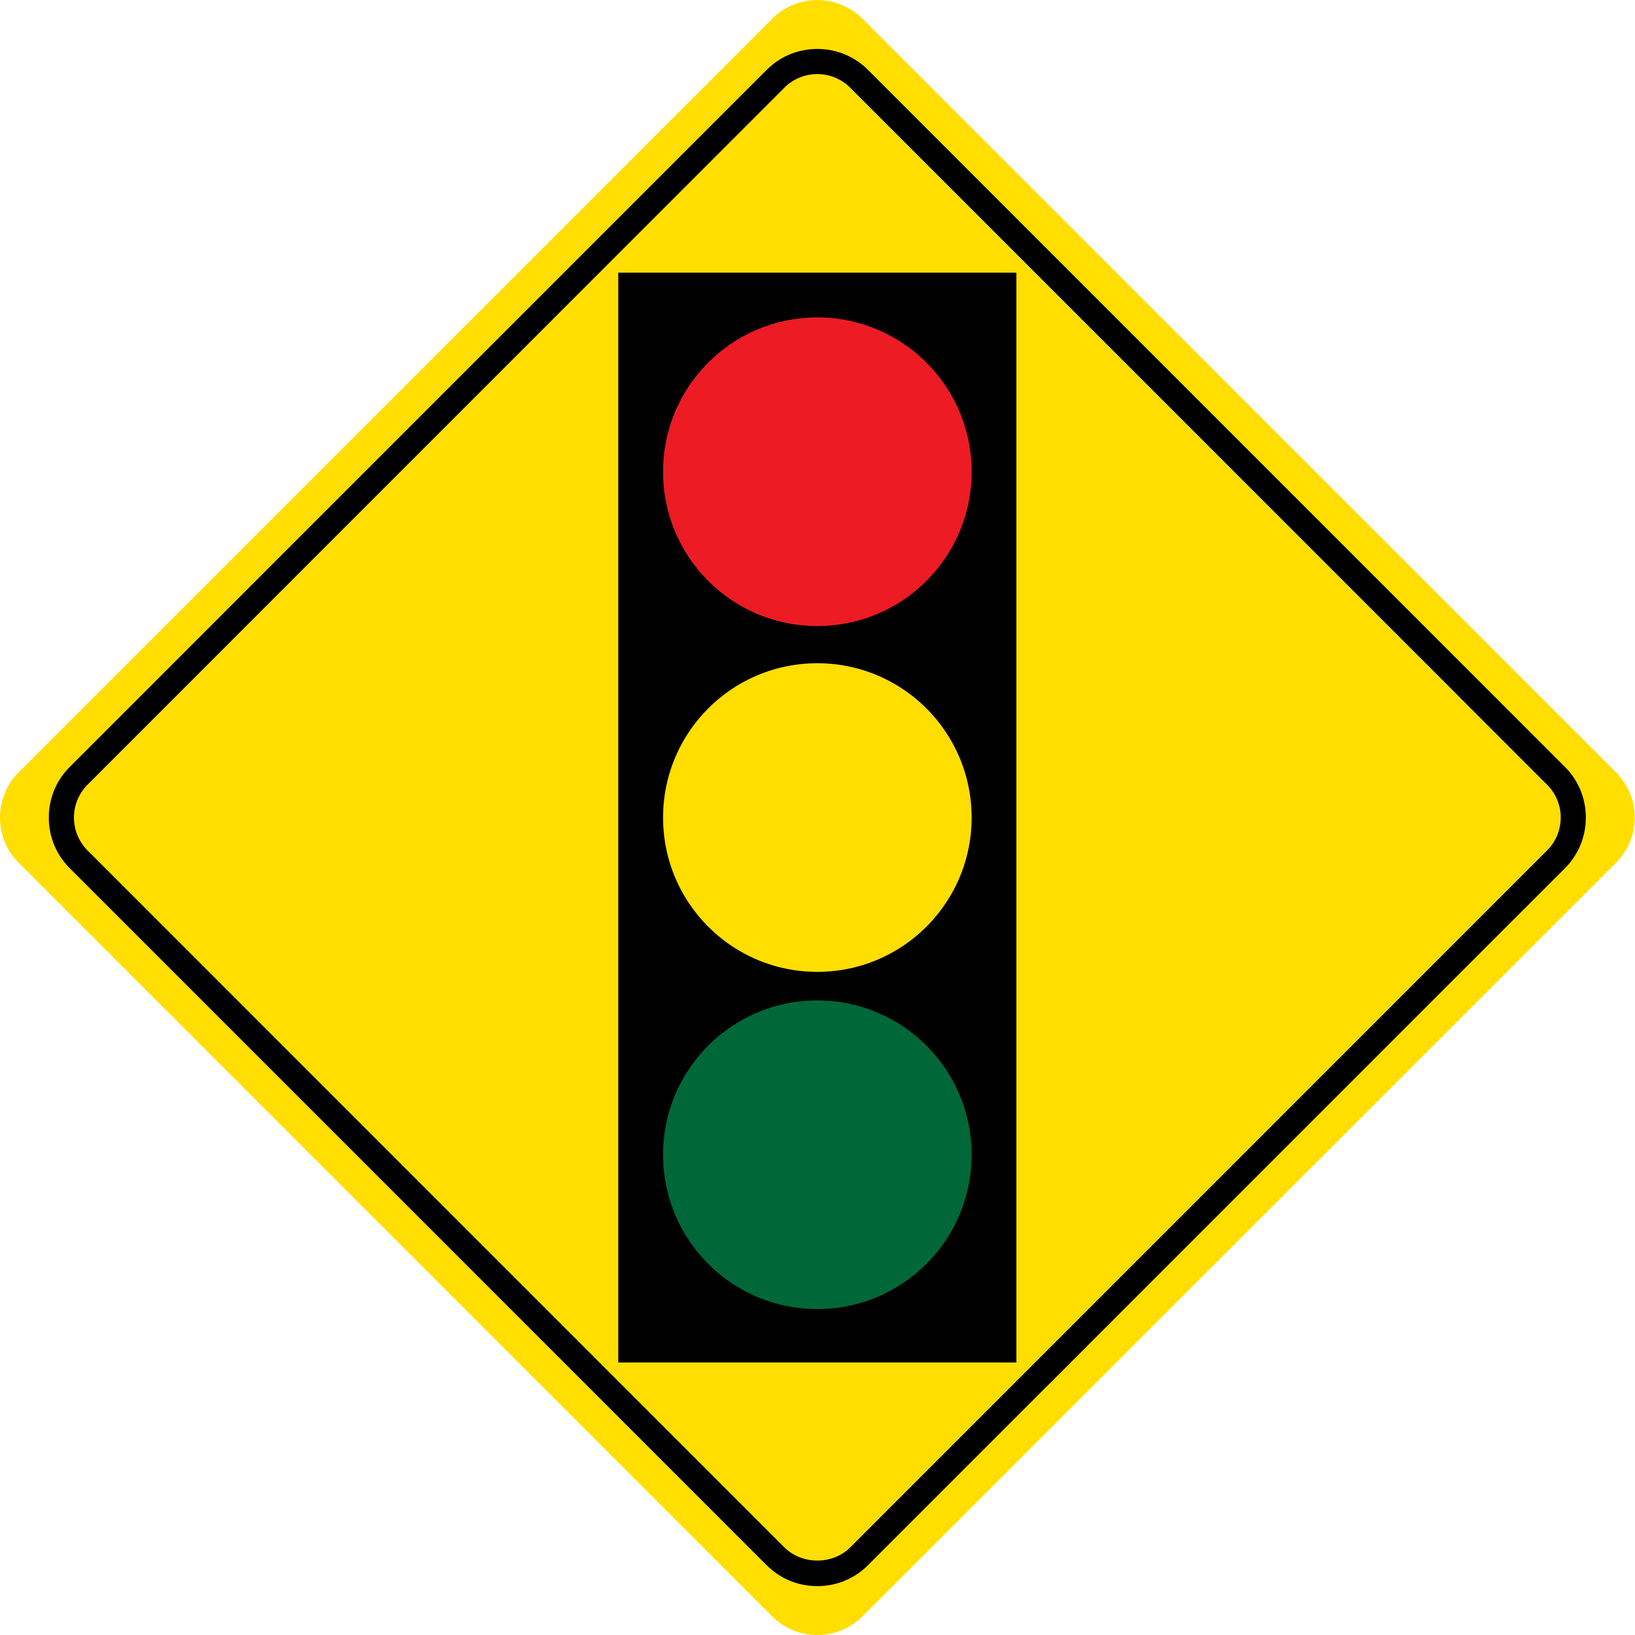 Traffic Signals Ahead